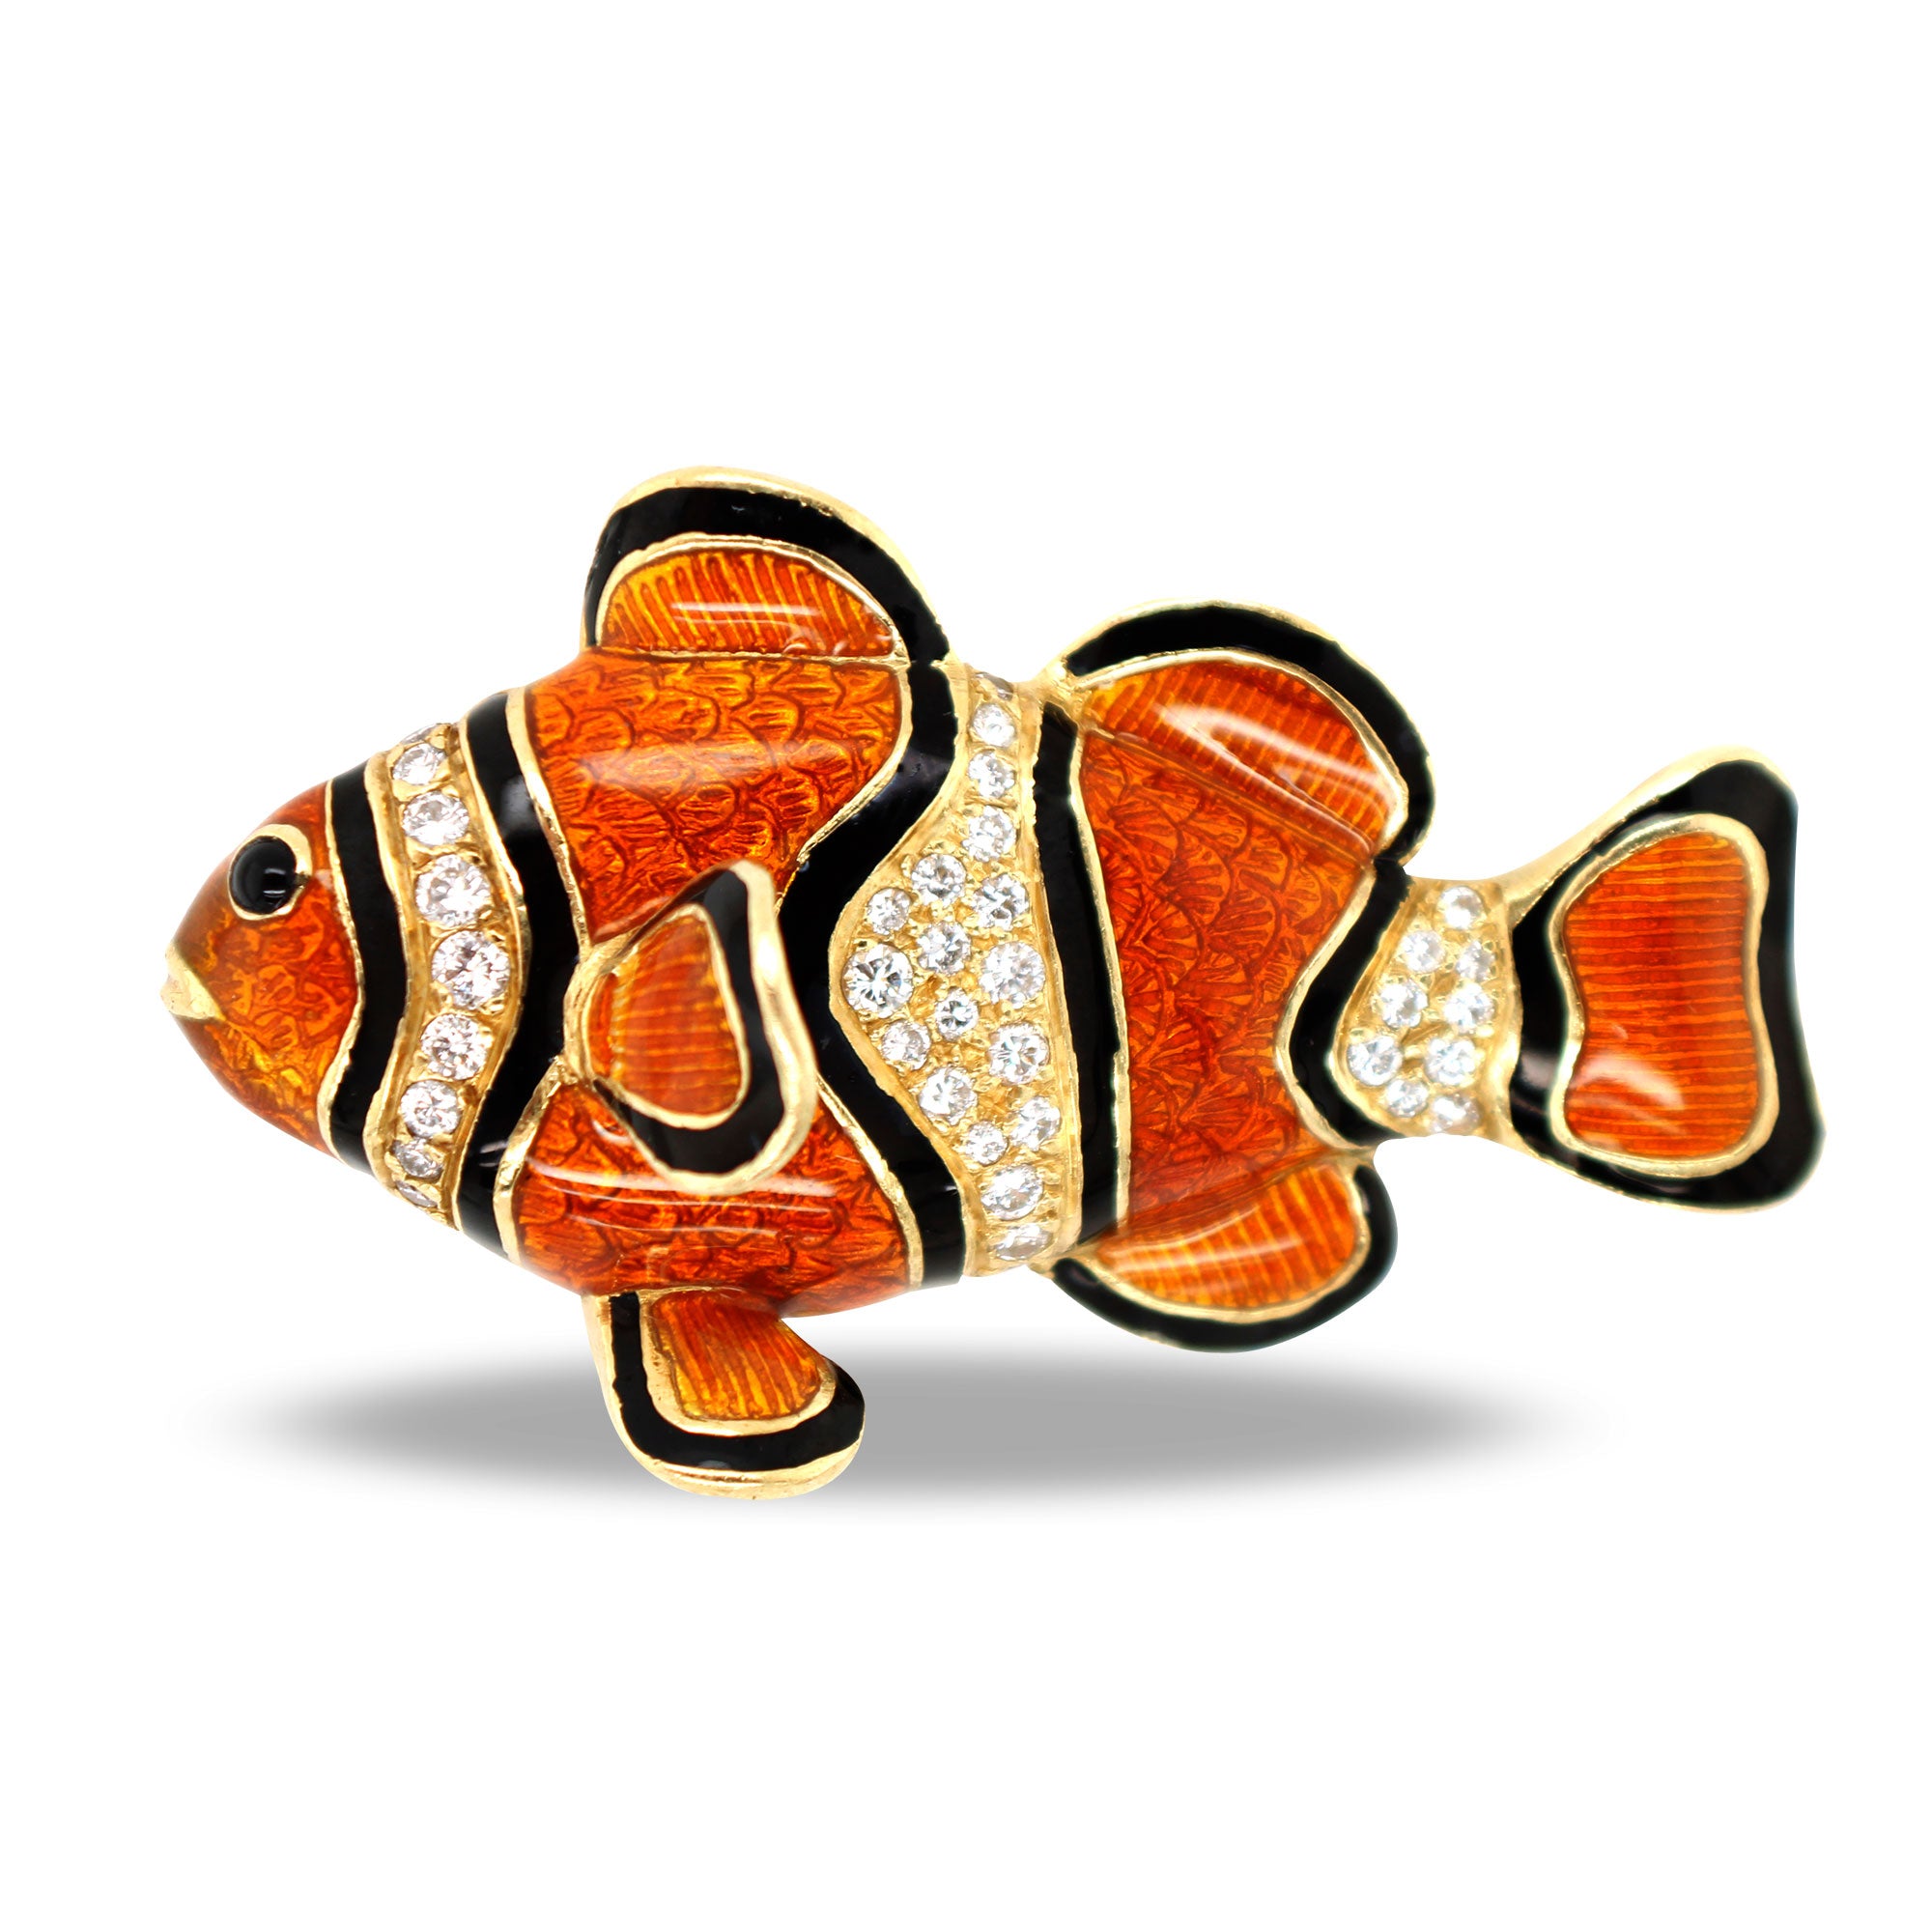 Finding Nemo Collection Kaston's Fish Art Brooch Clown Fish